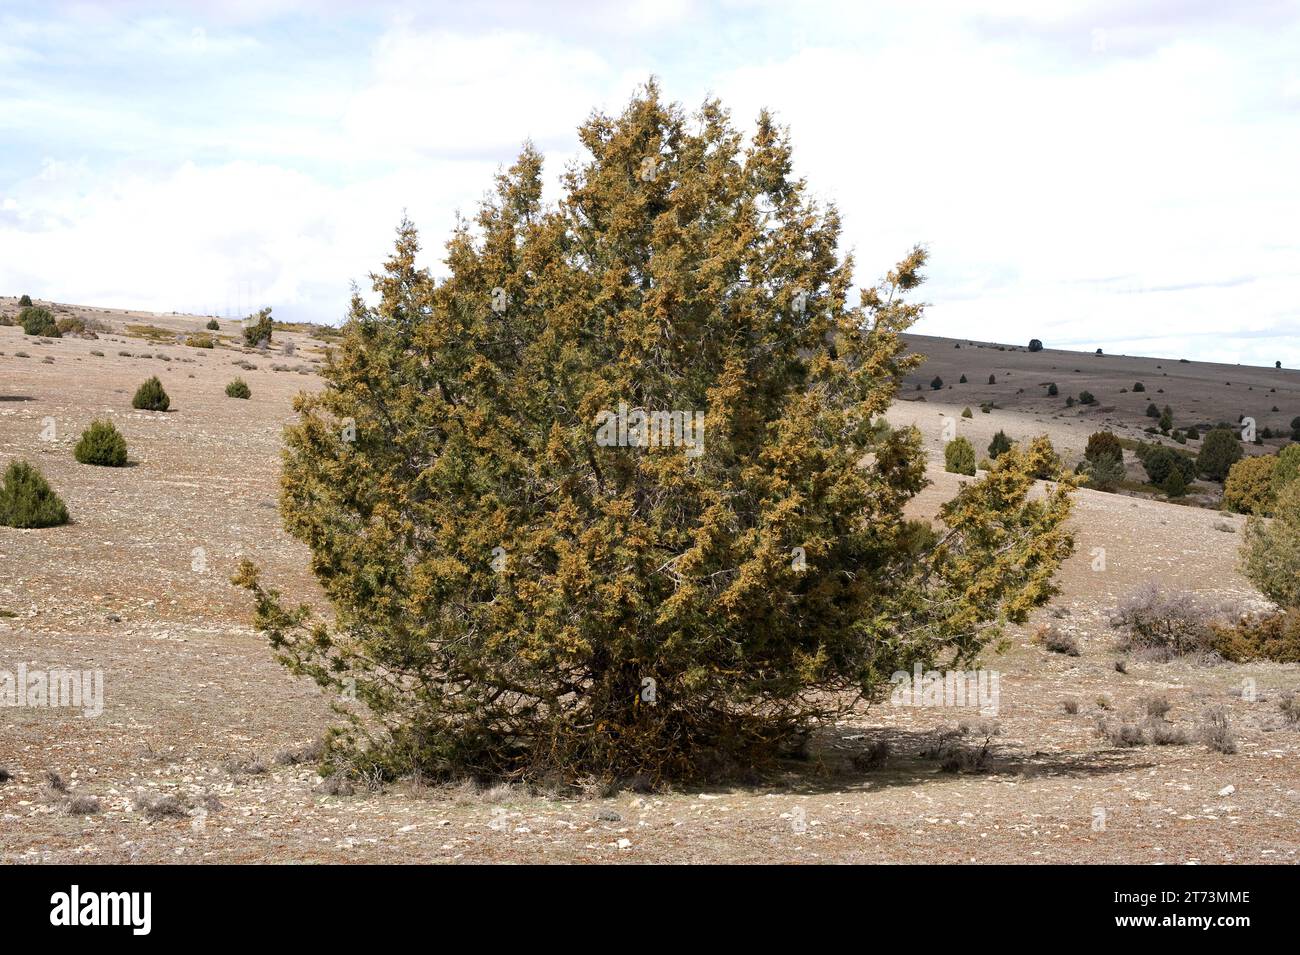 Spanish juniper (Juniperus thurifera) is an evergreen tree native to western Mediterranean mountains, specially in Spain. This photo was taken in Sabi Stock Photo